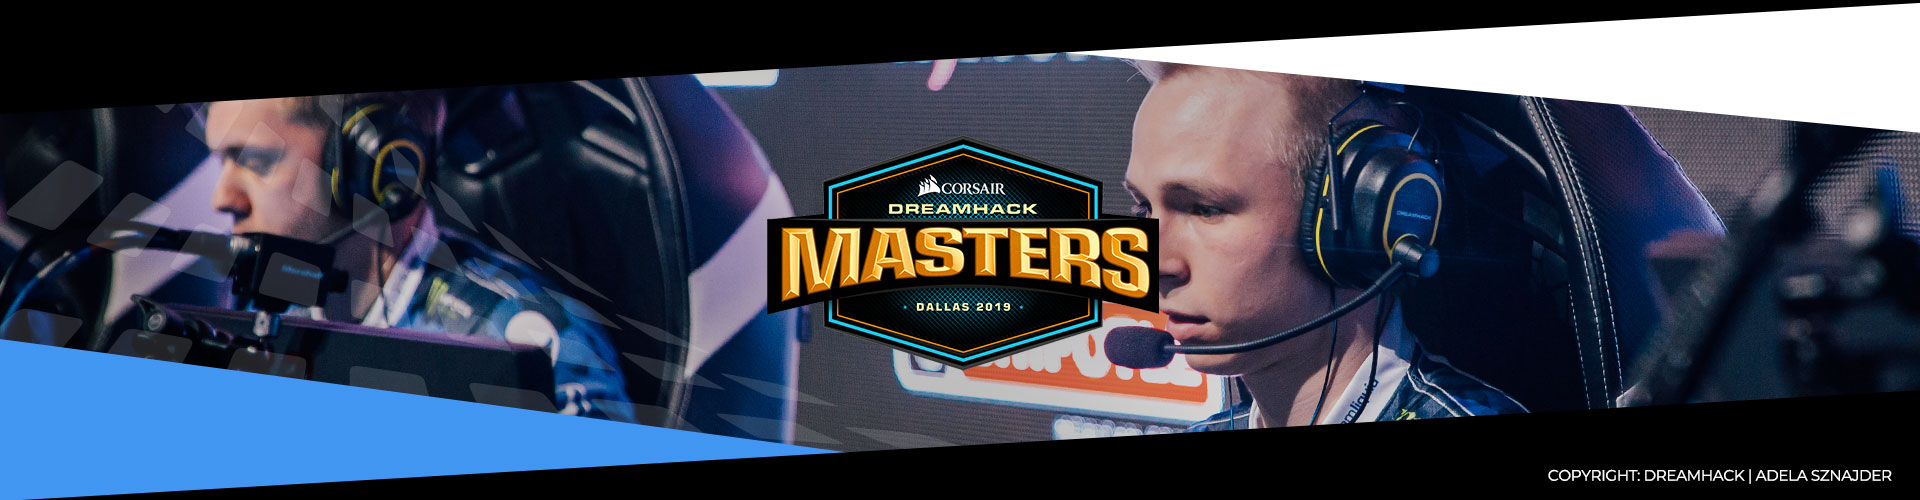 Dreamhack Masters Dallas 2. päivän yhteenveto